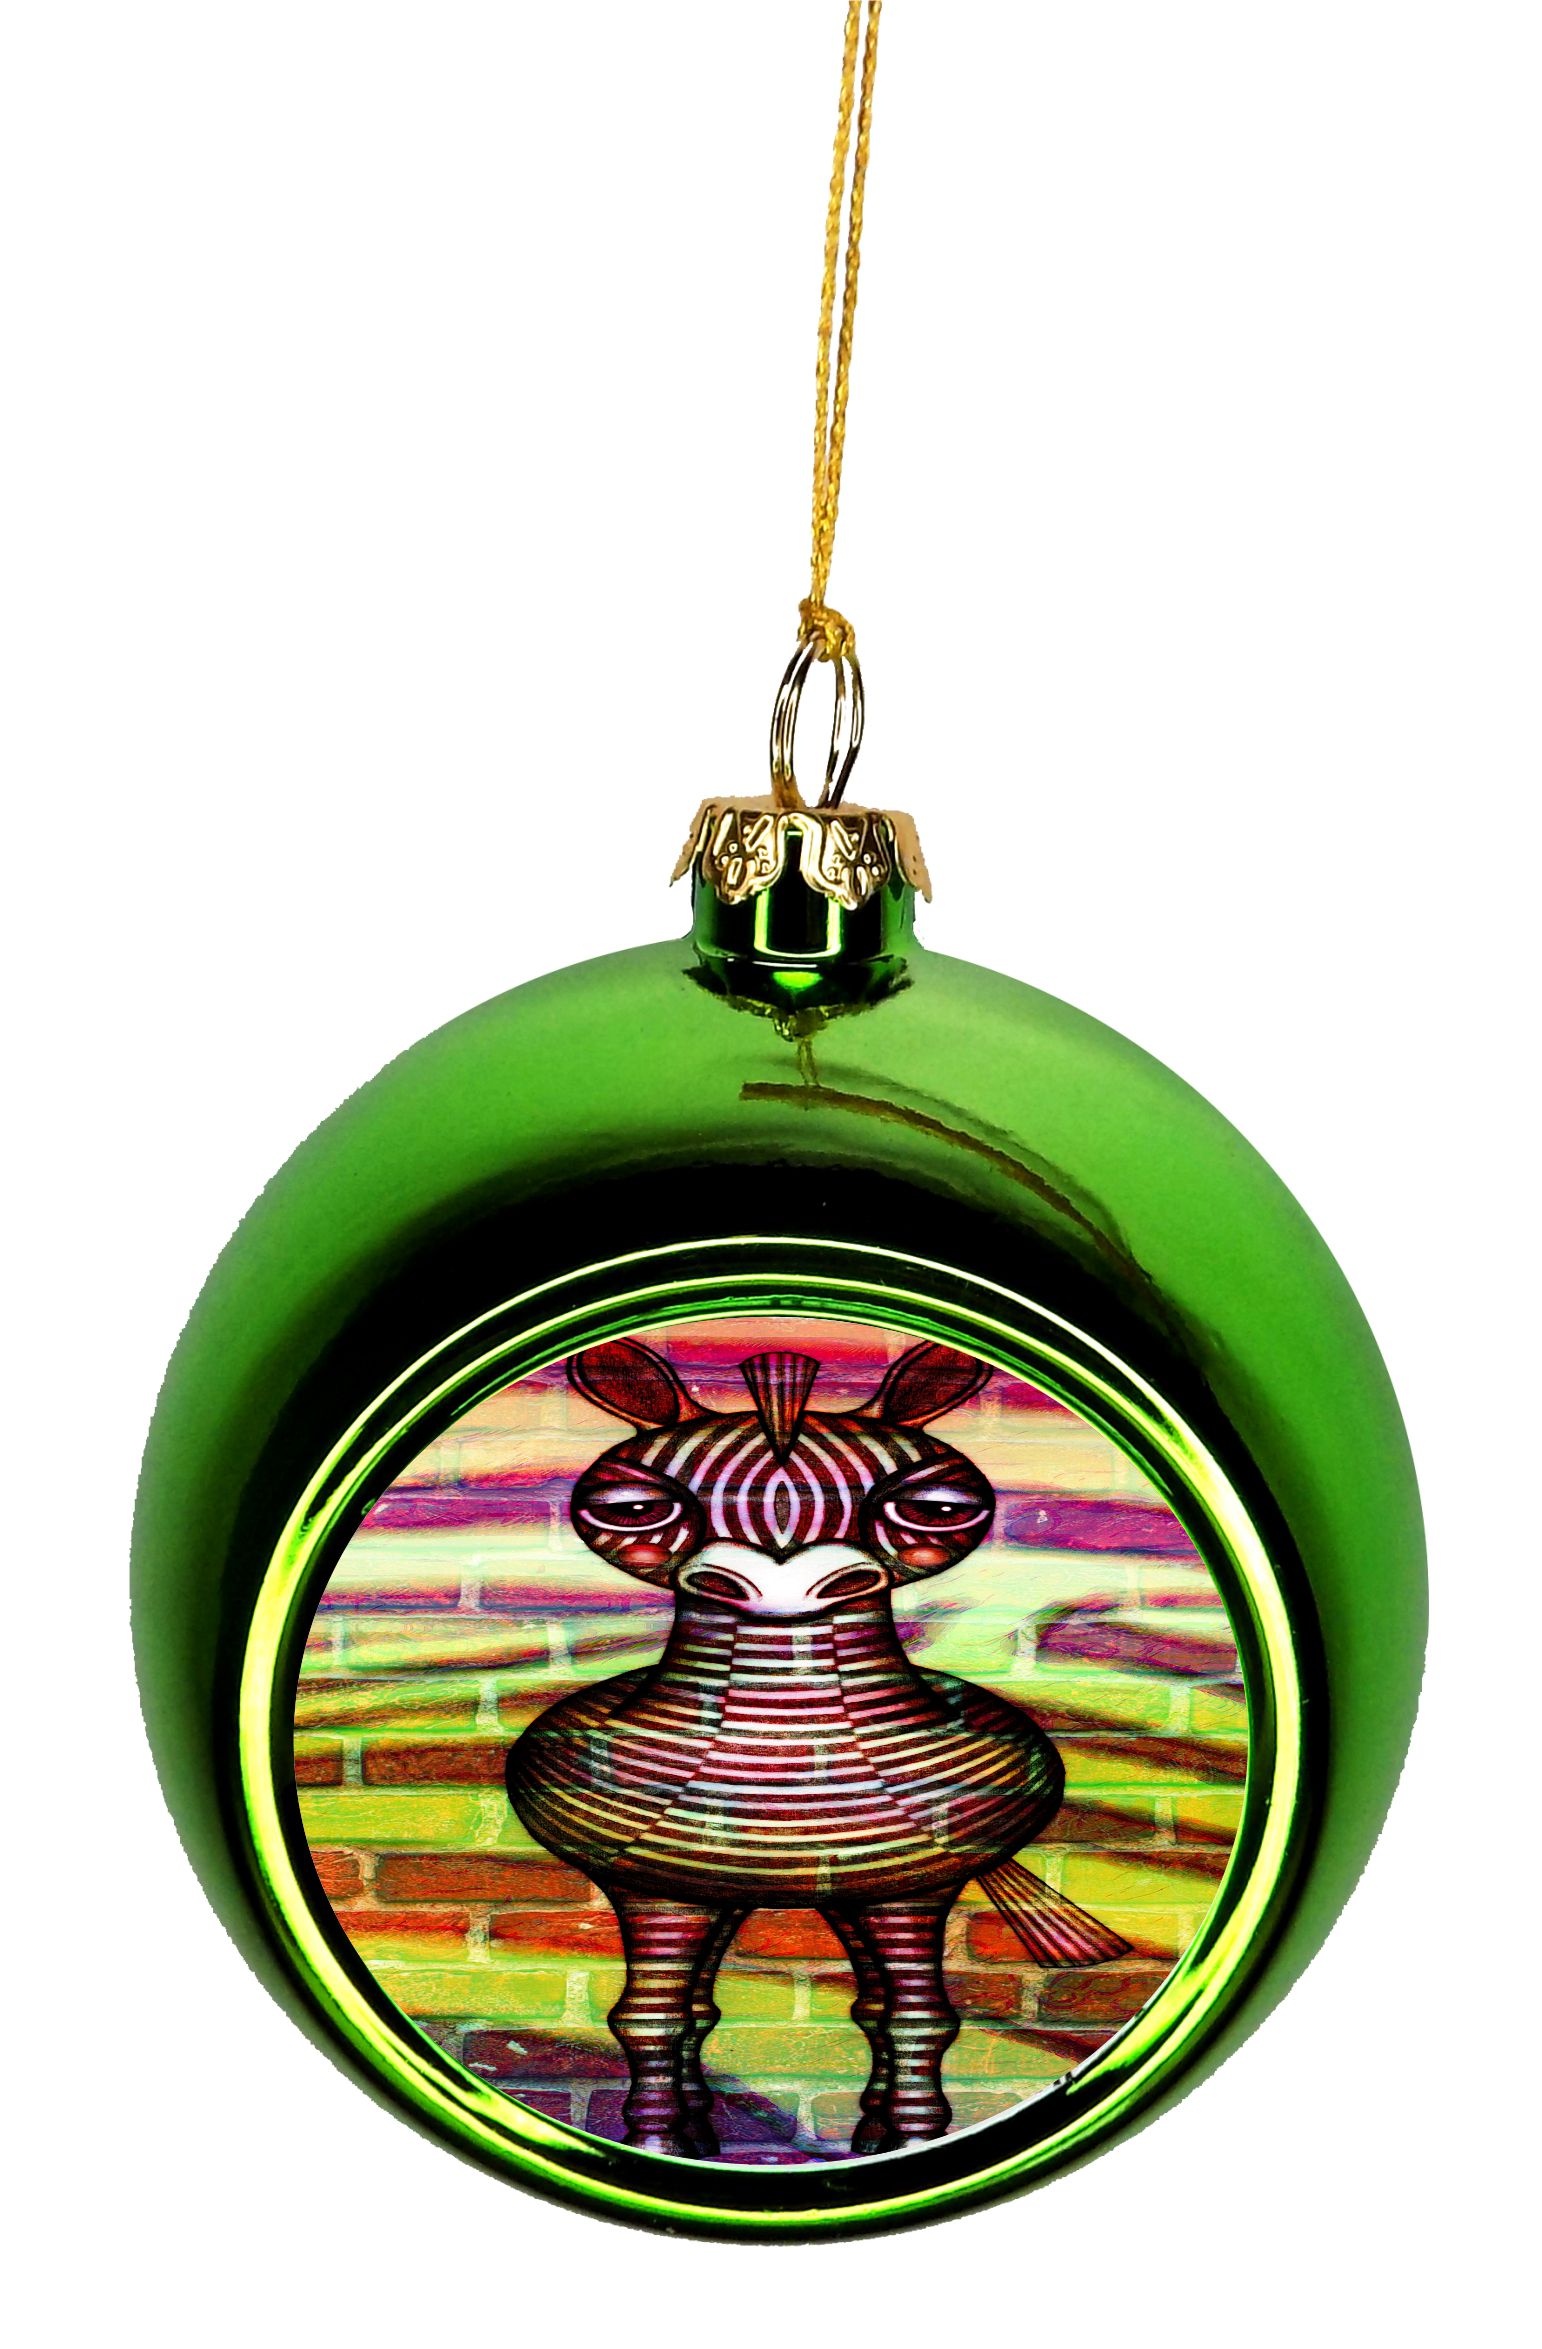 Zebra Brick Wall Street Art Print Design Ornaments Green Bauble Christmas Ornament Balls - image 1 of 1